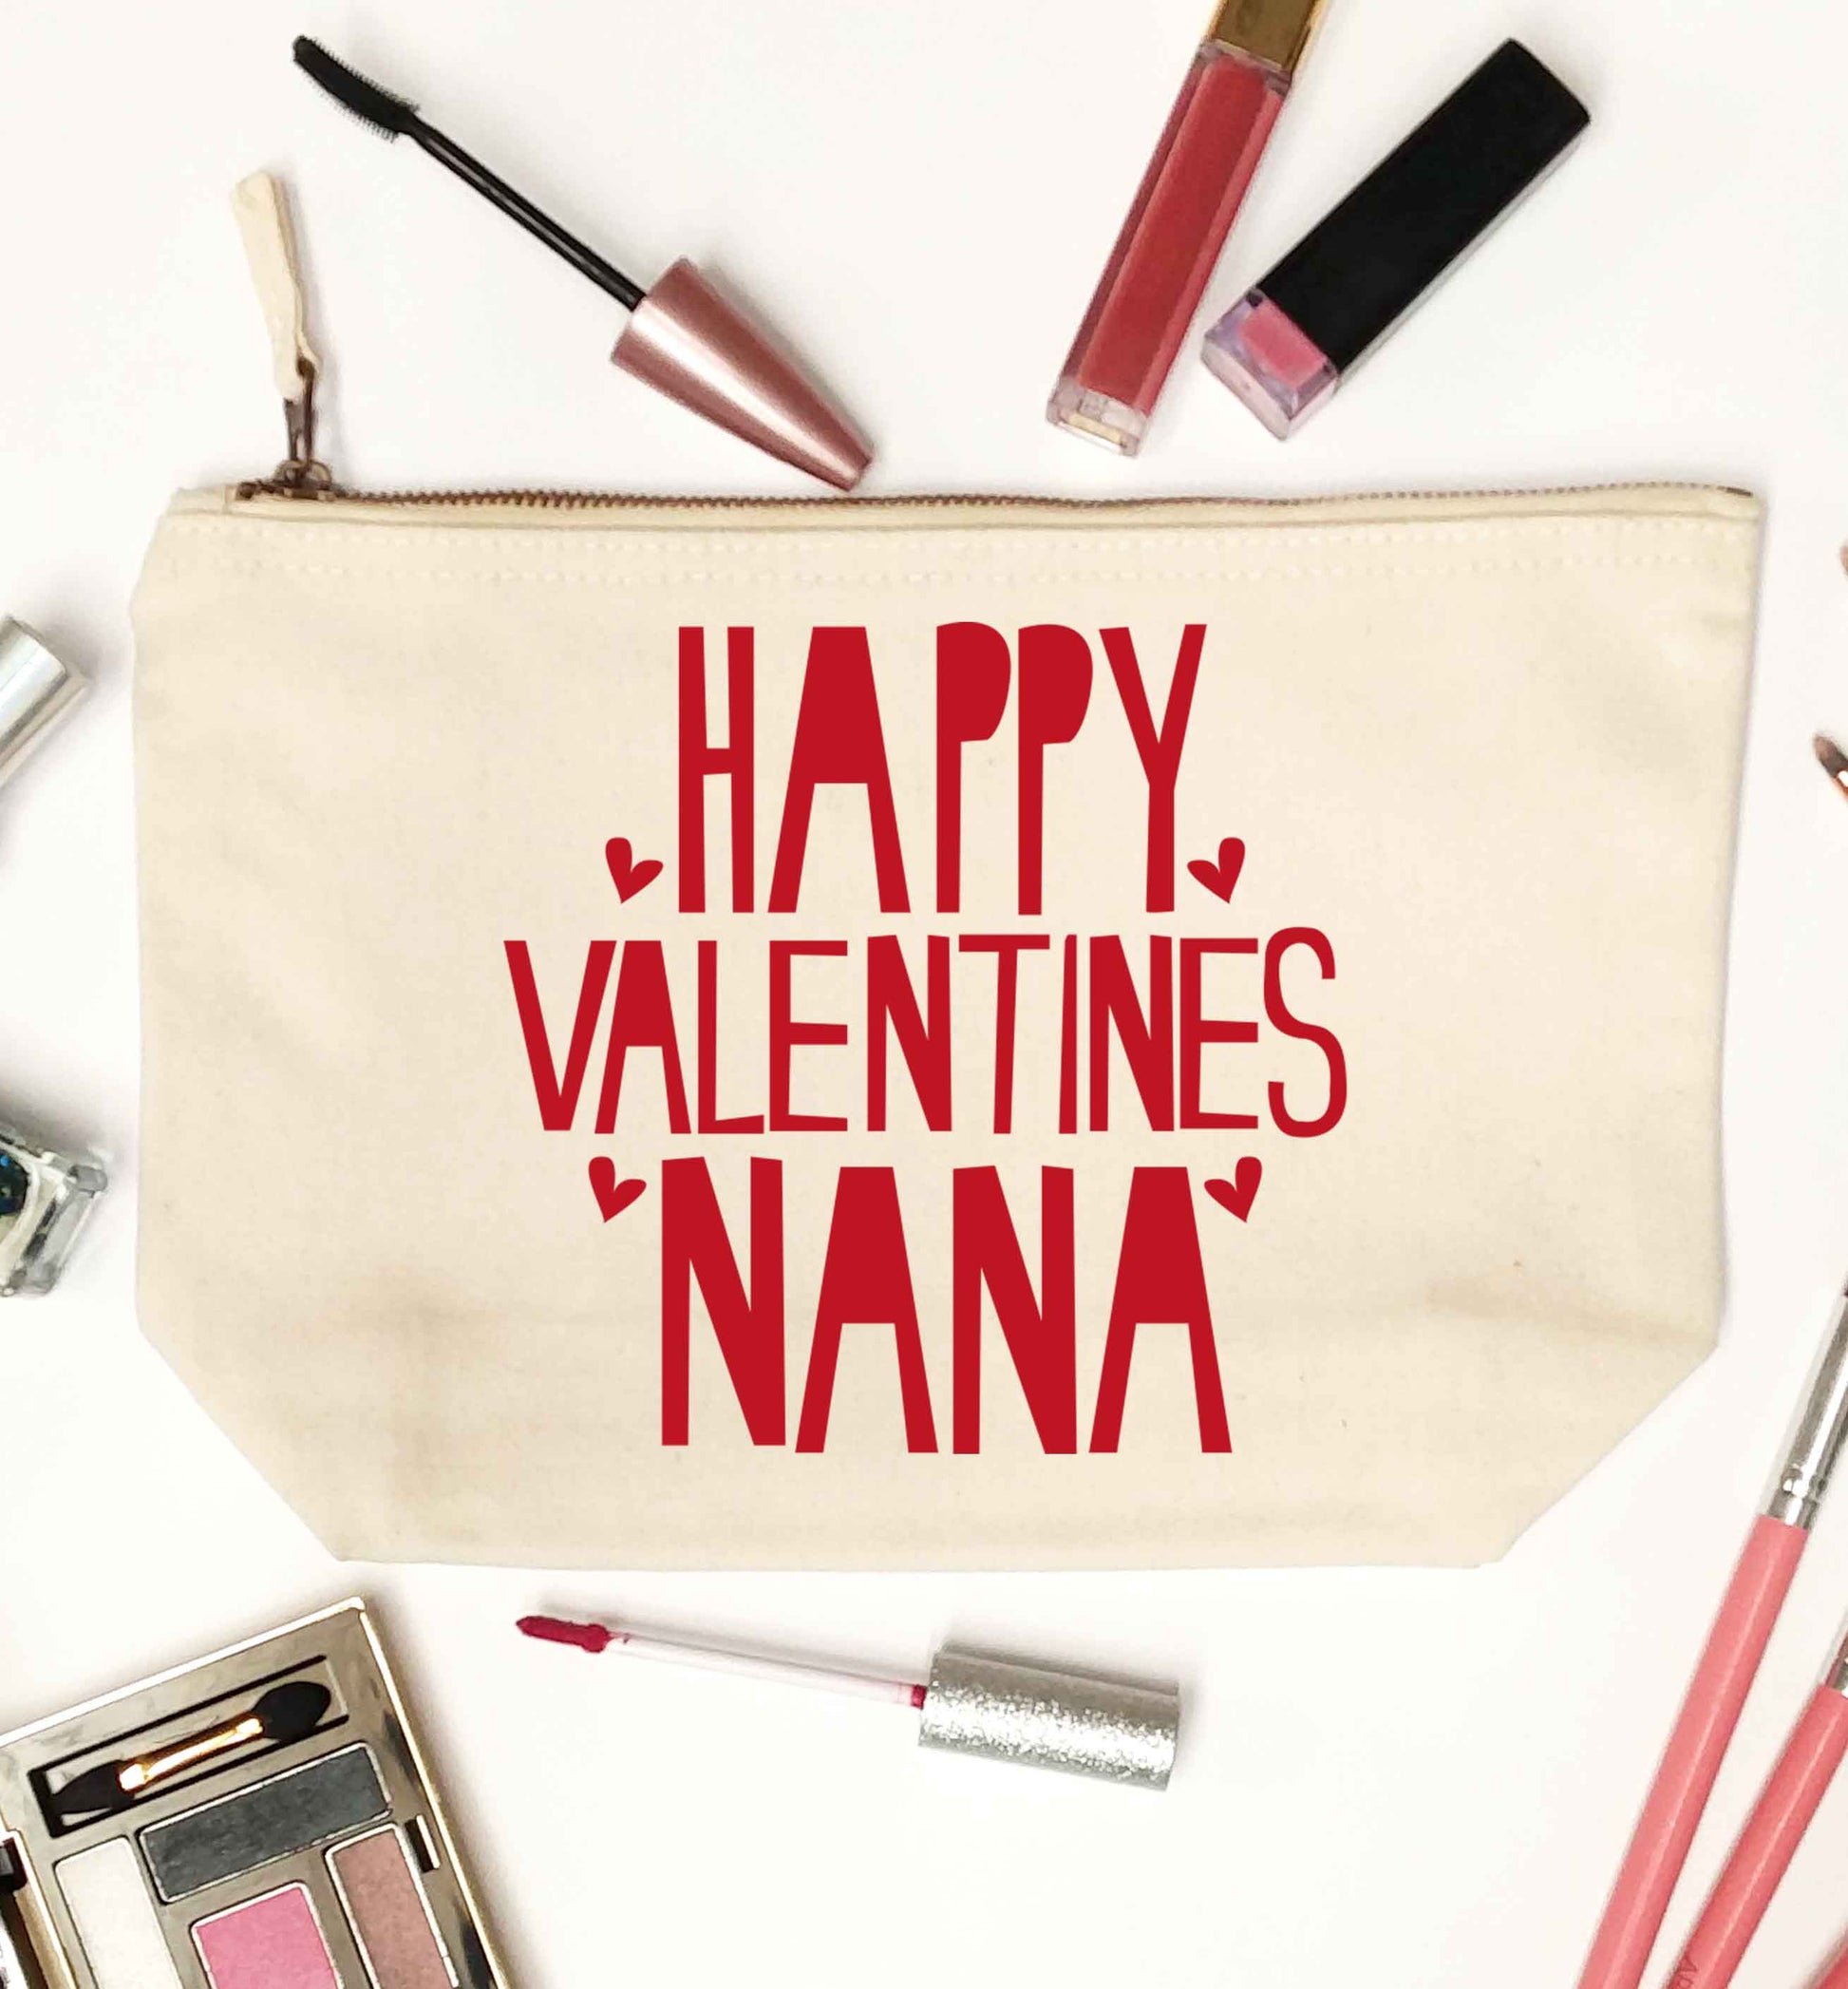 Happy valentines nana natural makeup bag